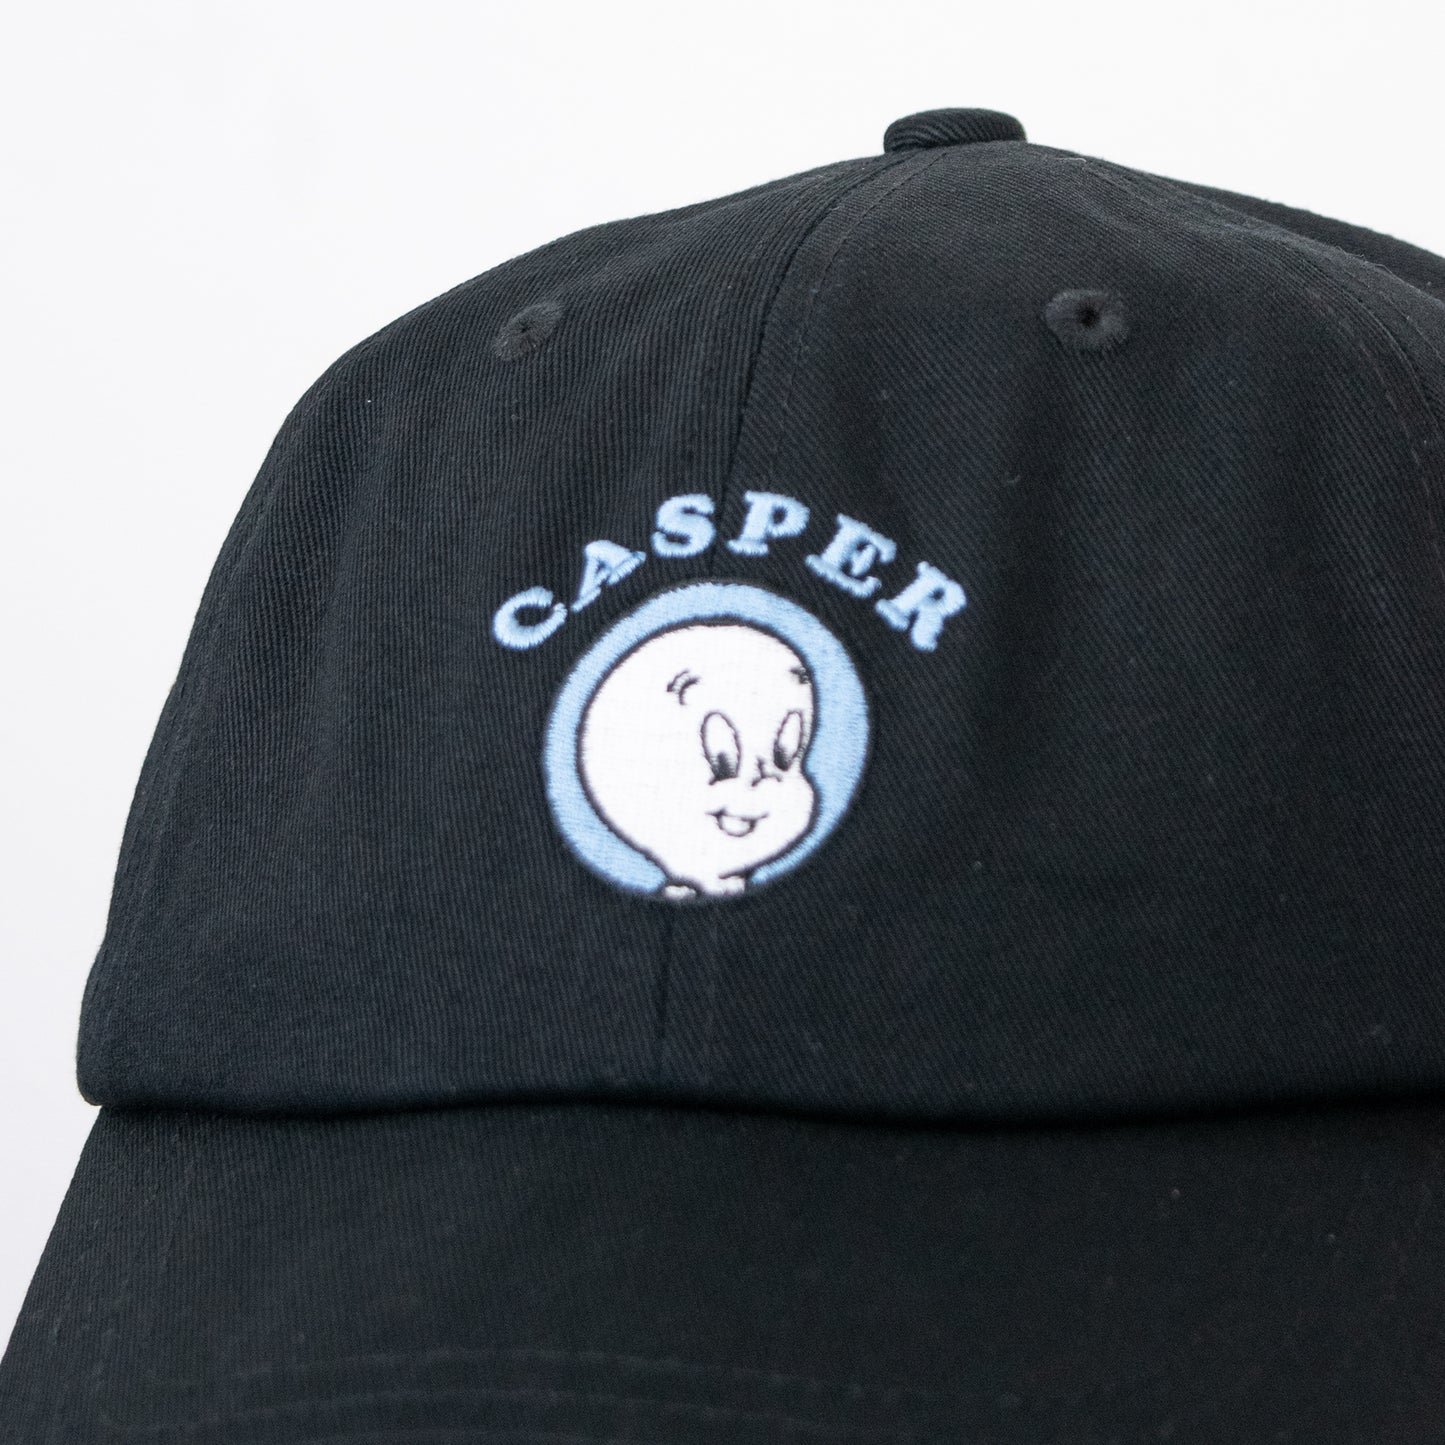 Casper Embroidered Cap BLACK